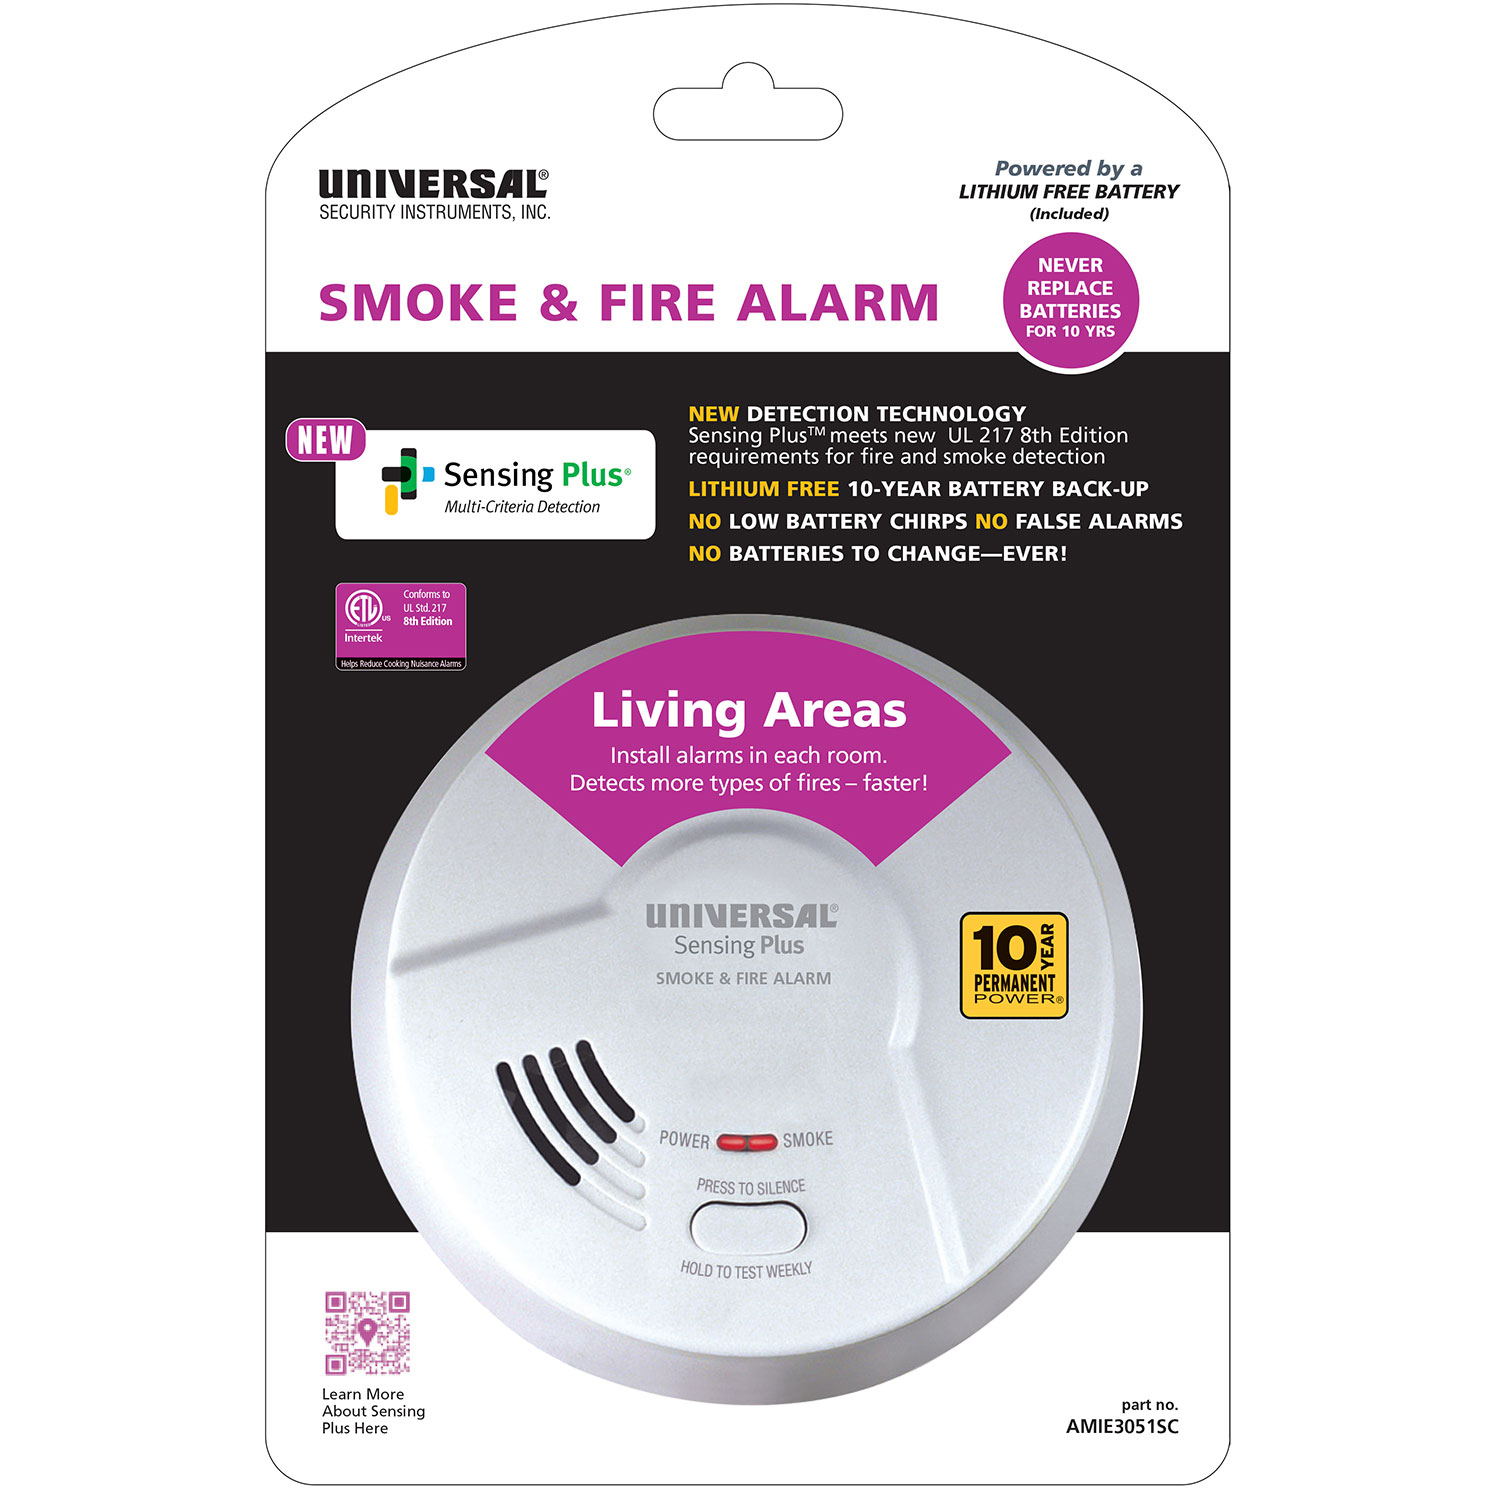 10 year new UL 217 standard Smoke & Fire Alarm